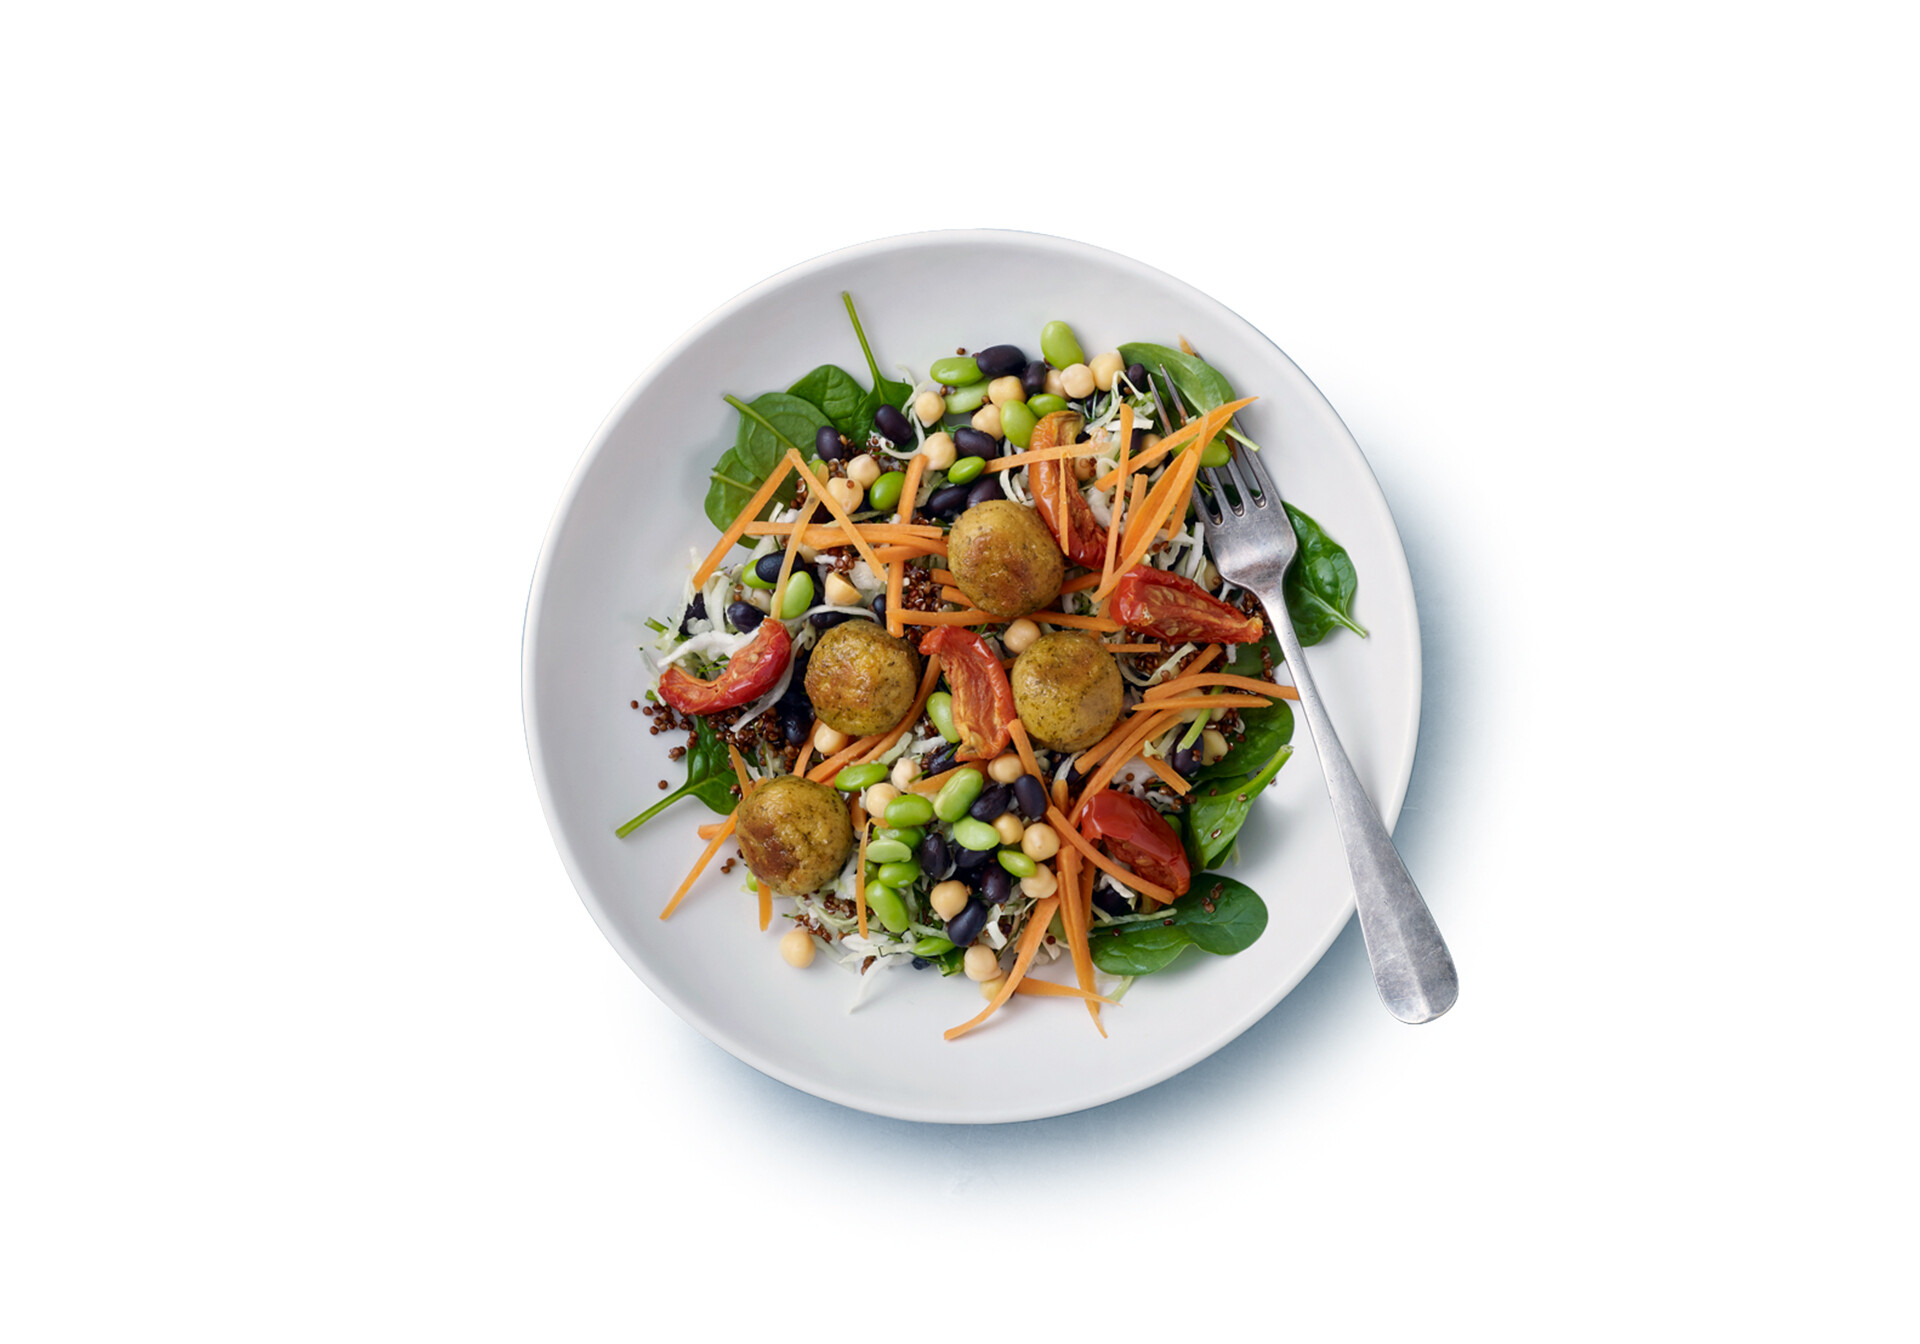 Falafel and salad – vegetarian